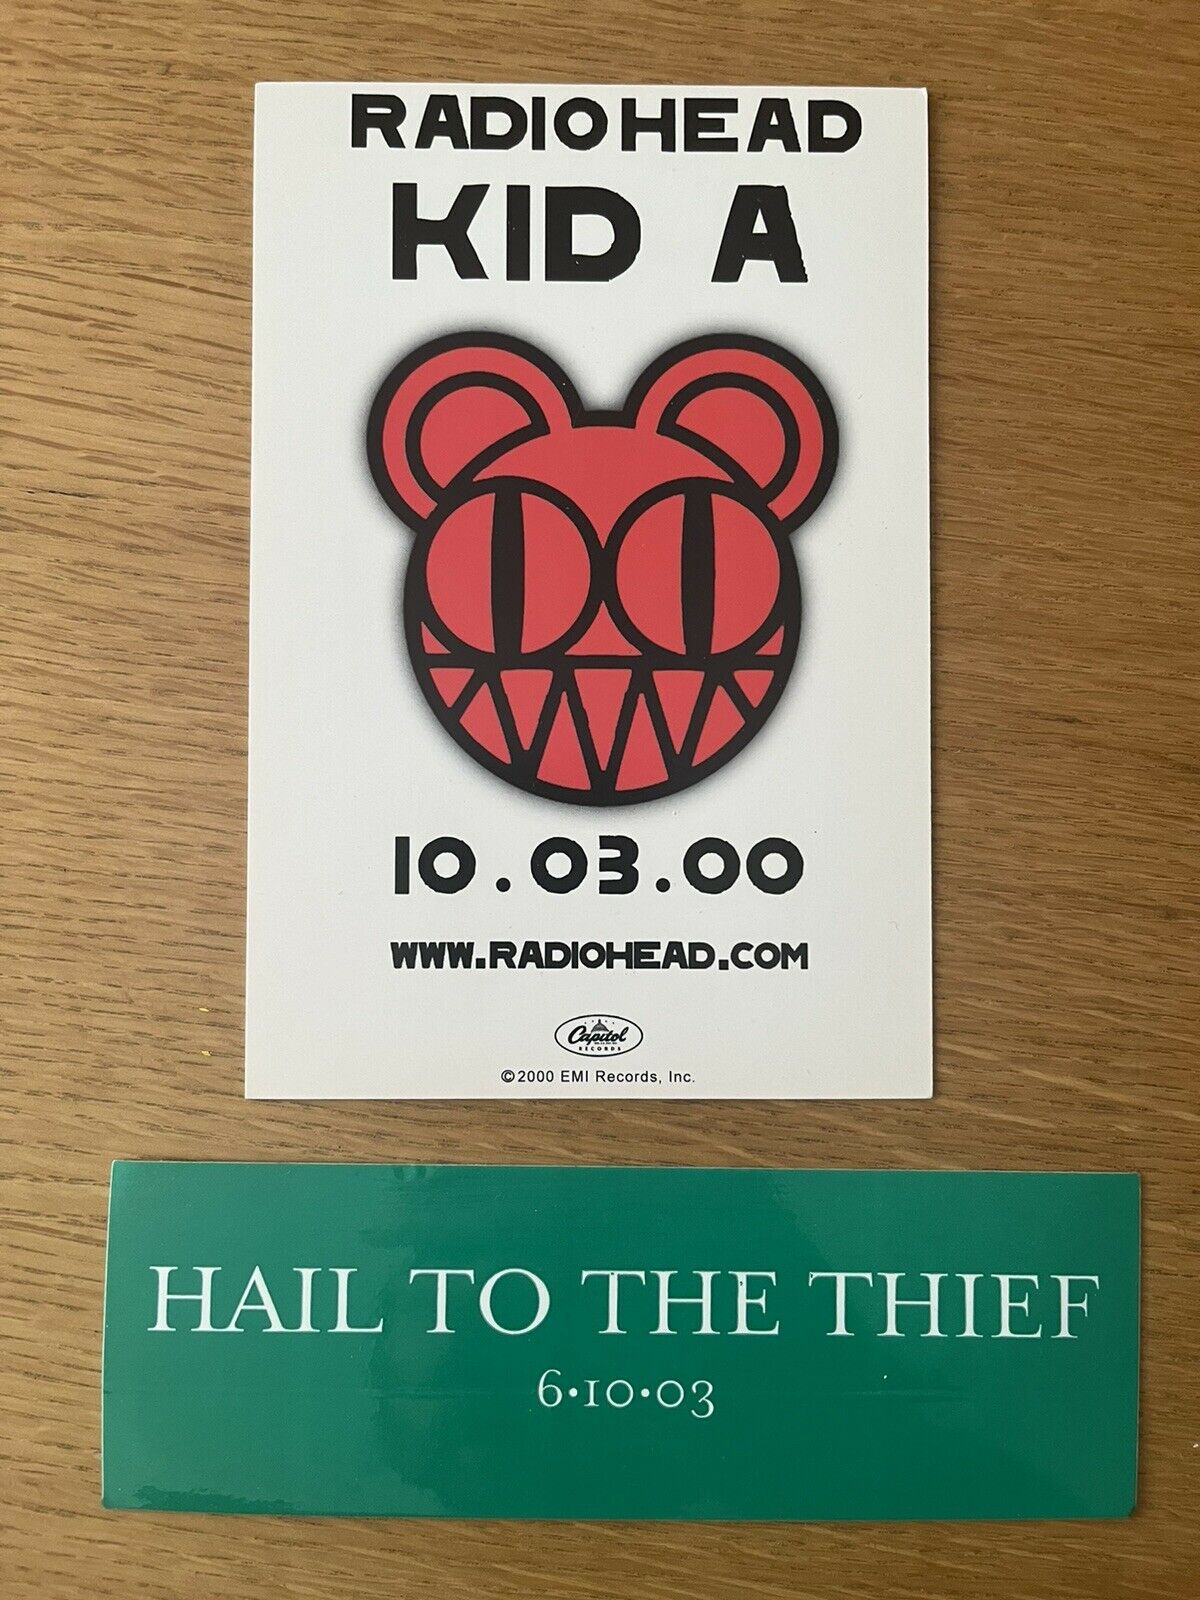 Radiohead Kid A Postcard + Hail To The Thief Bumper Sticker Rare Items Bends Lot